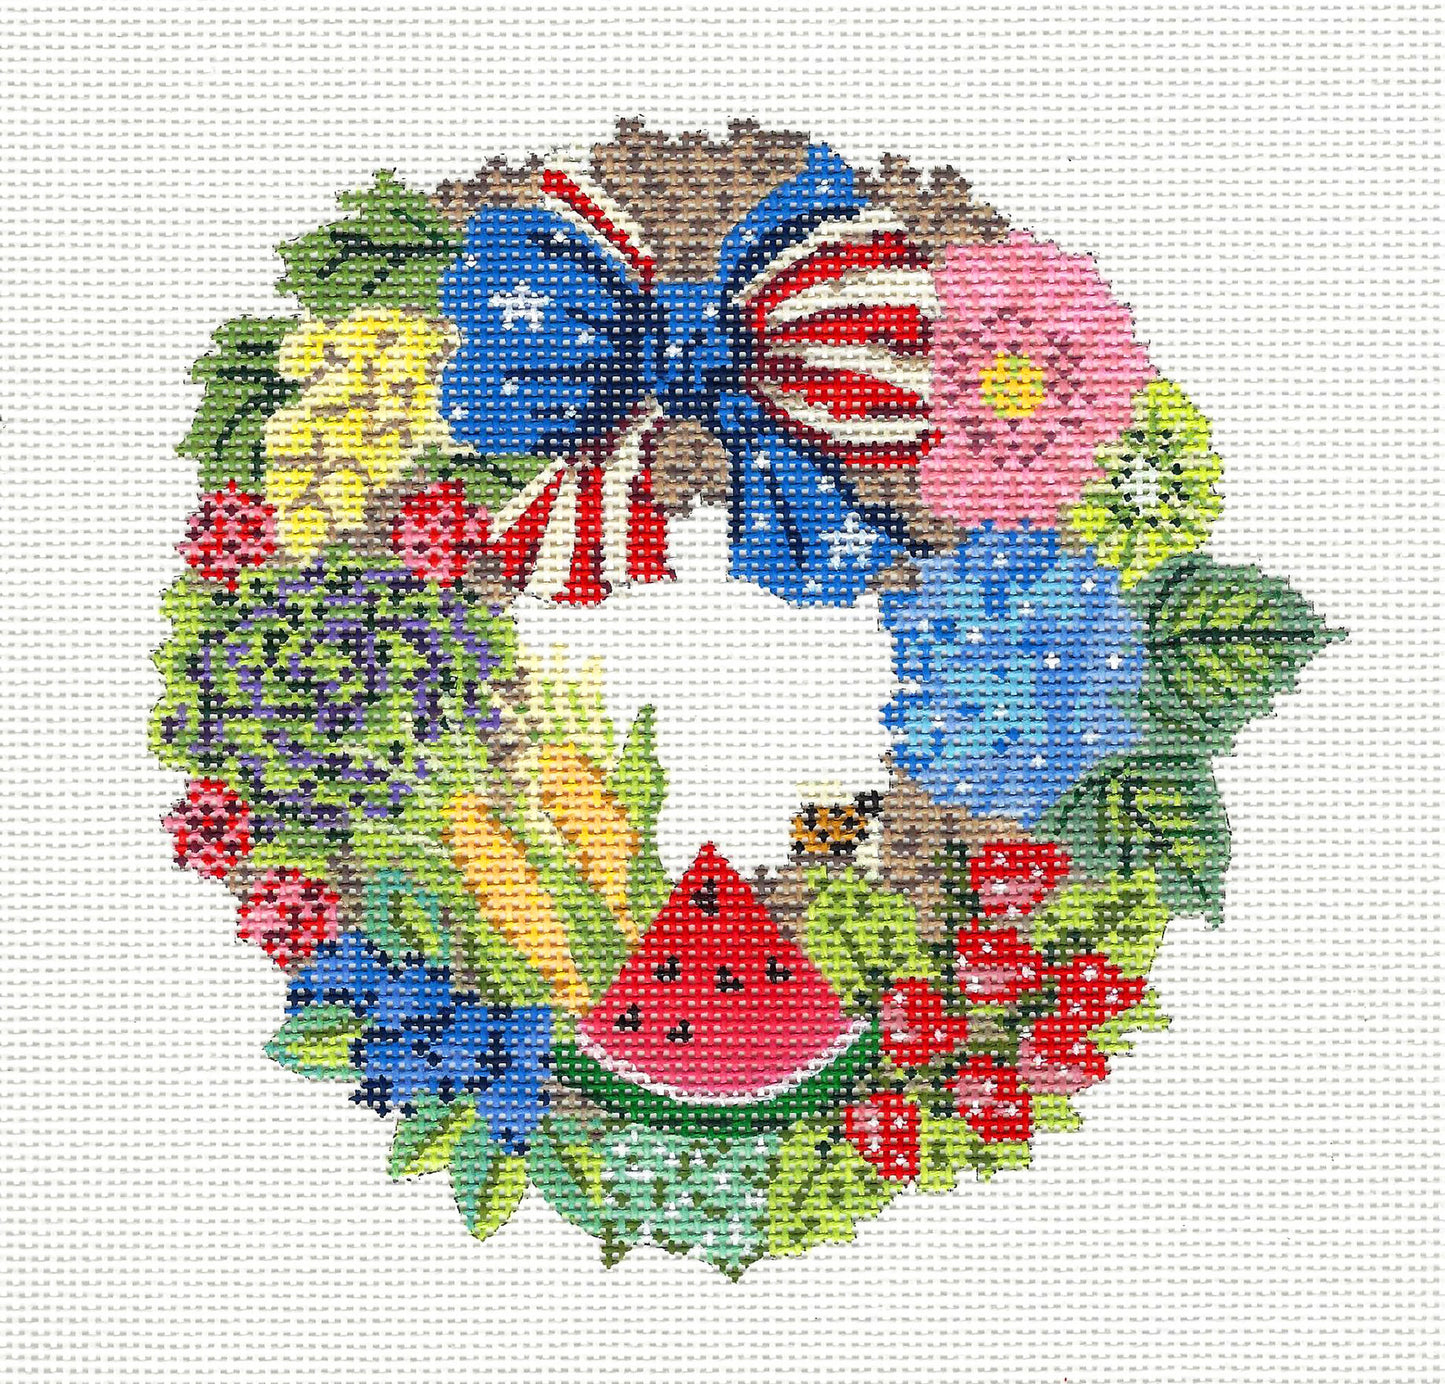 Wreath ~ Summer Celebration Wreath handpainted Needlepoint Canvas by Kelly Clark